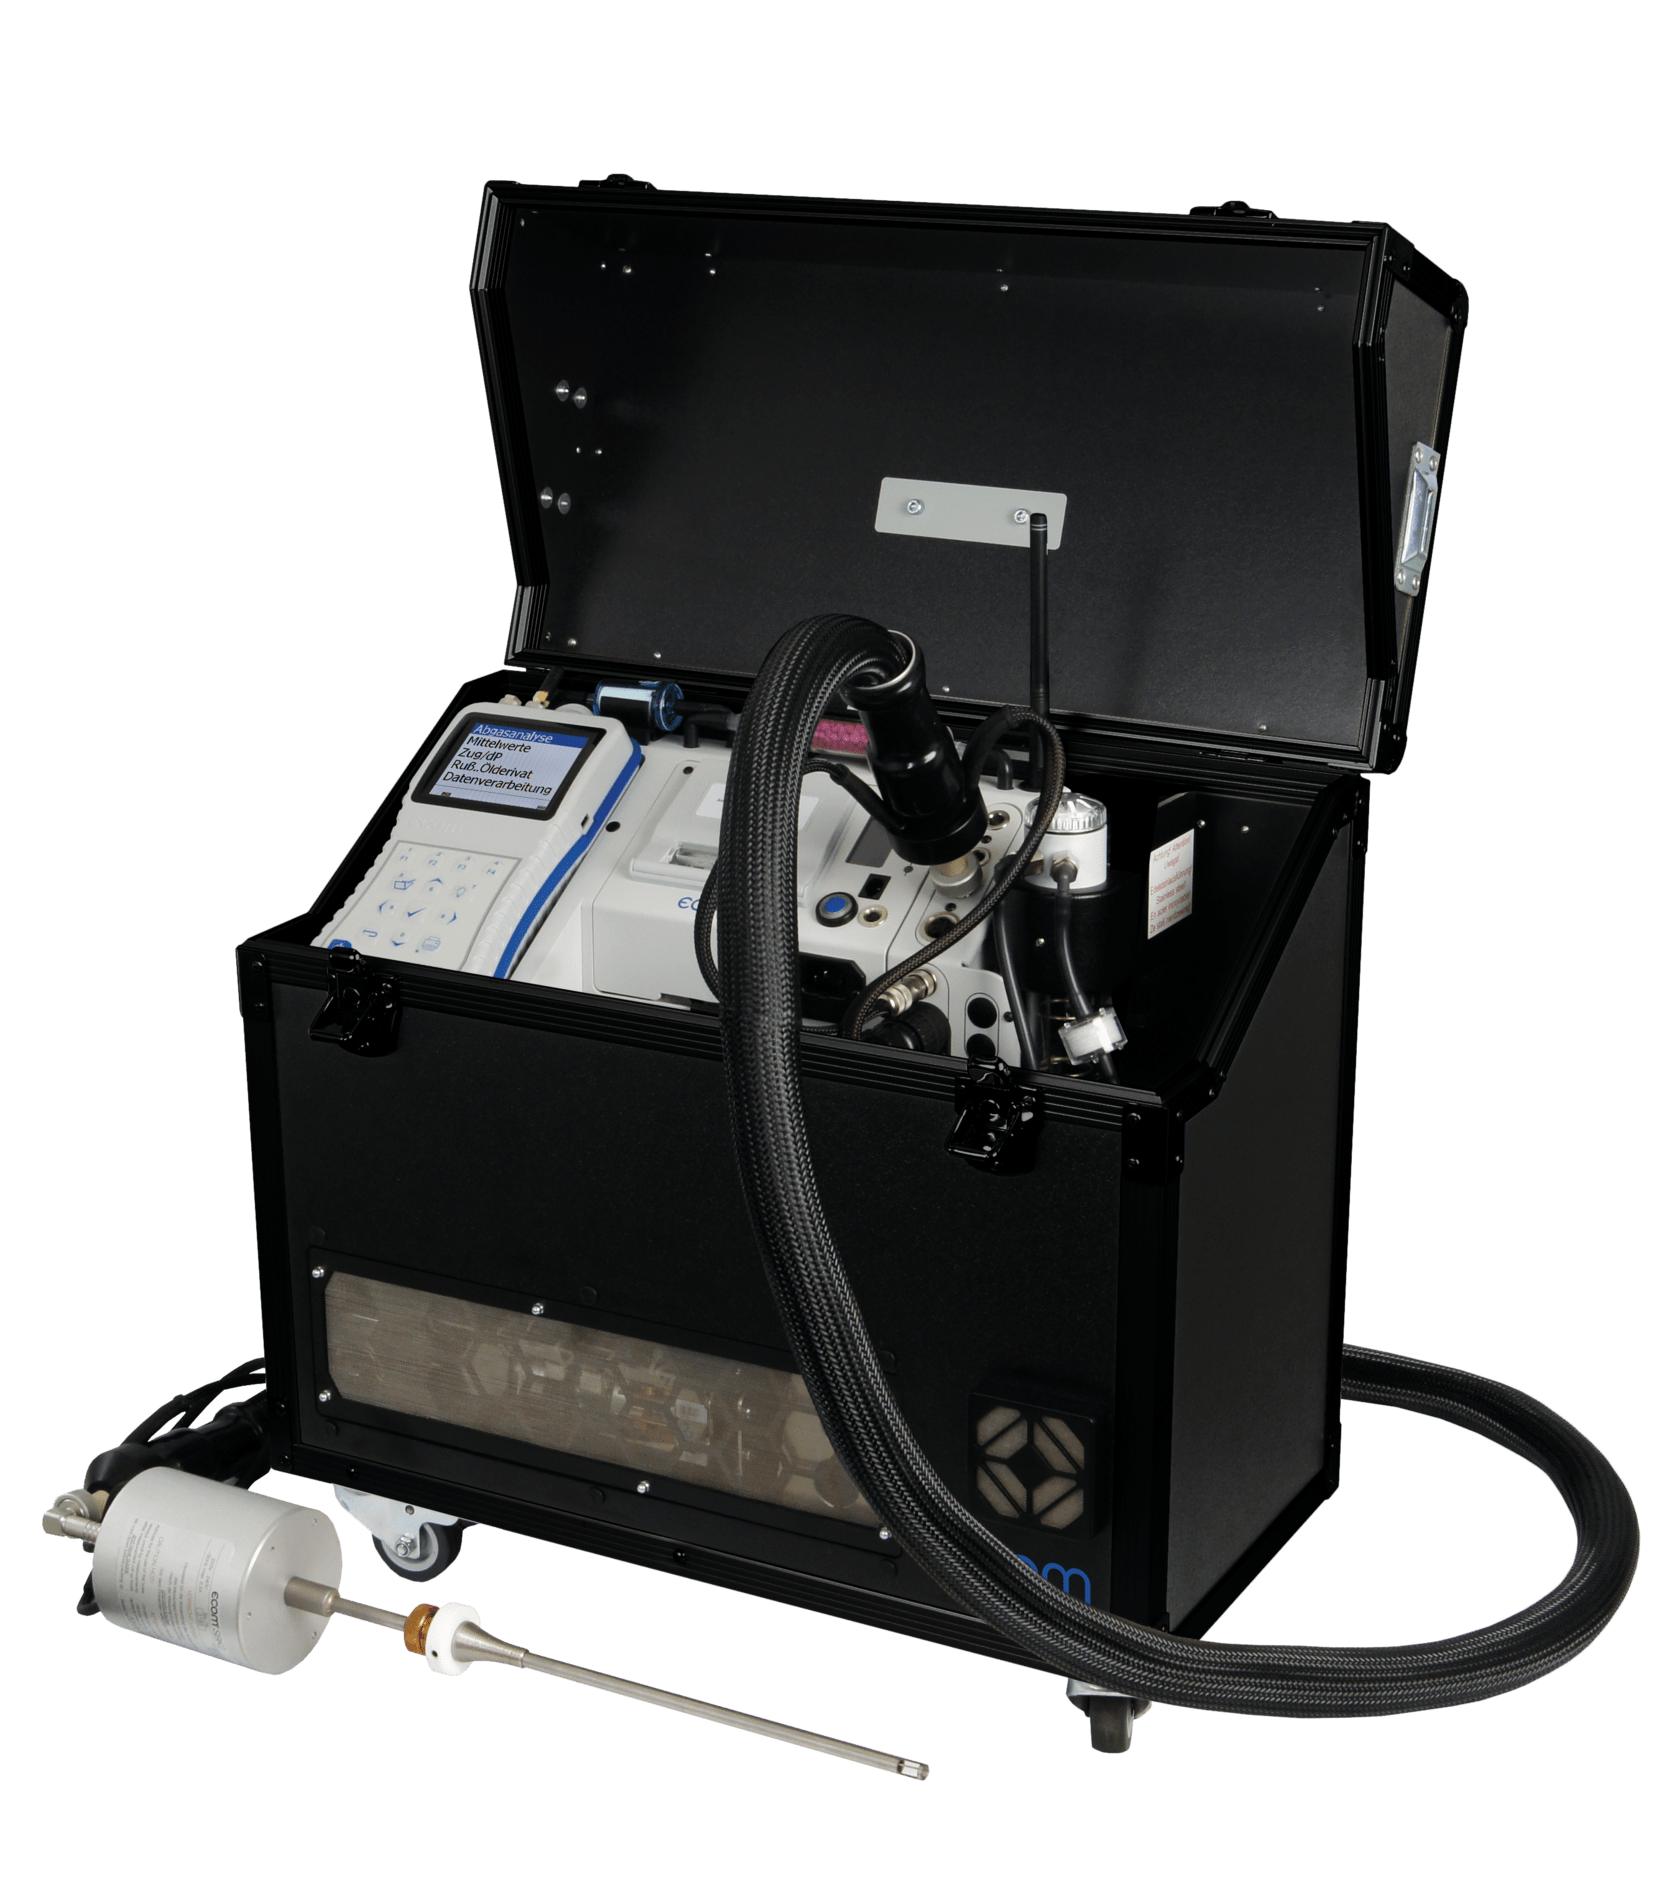 ecom-J2KNpro 专家级多功能型烟气分析仪